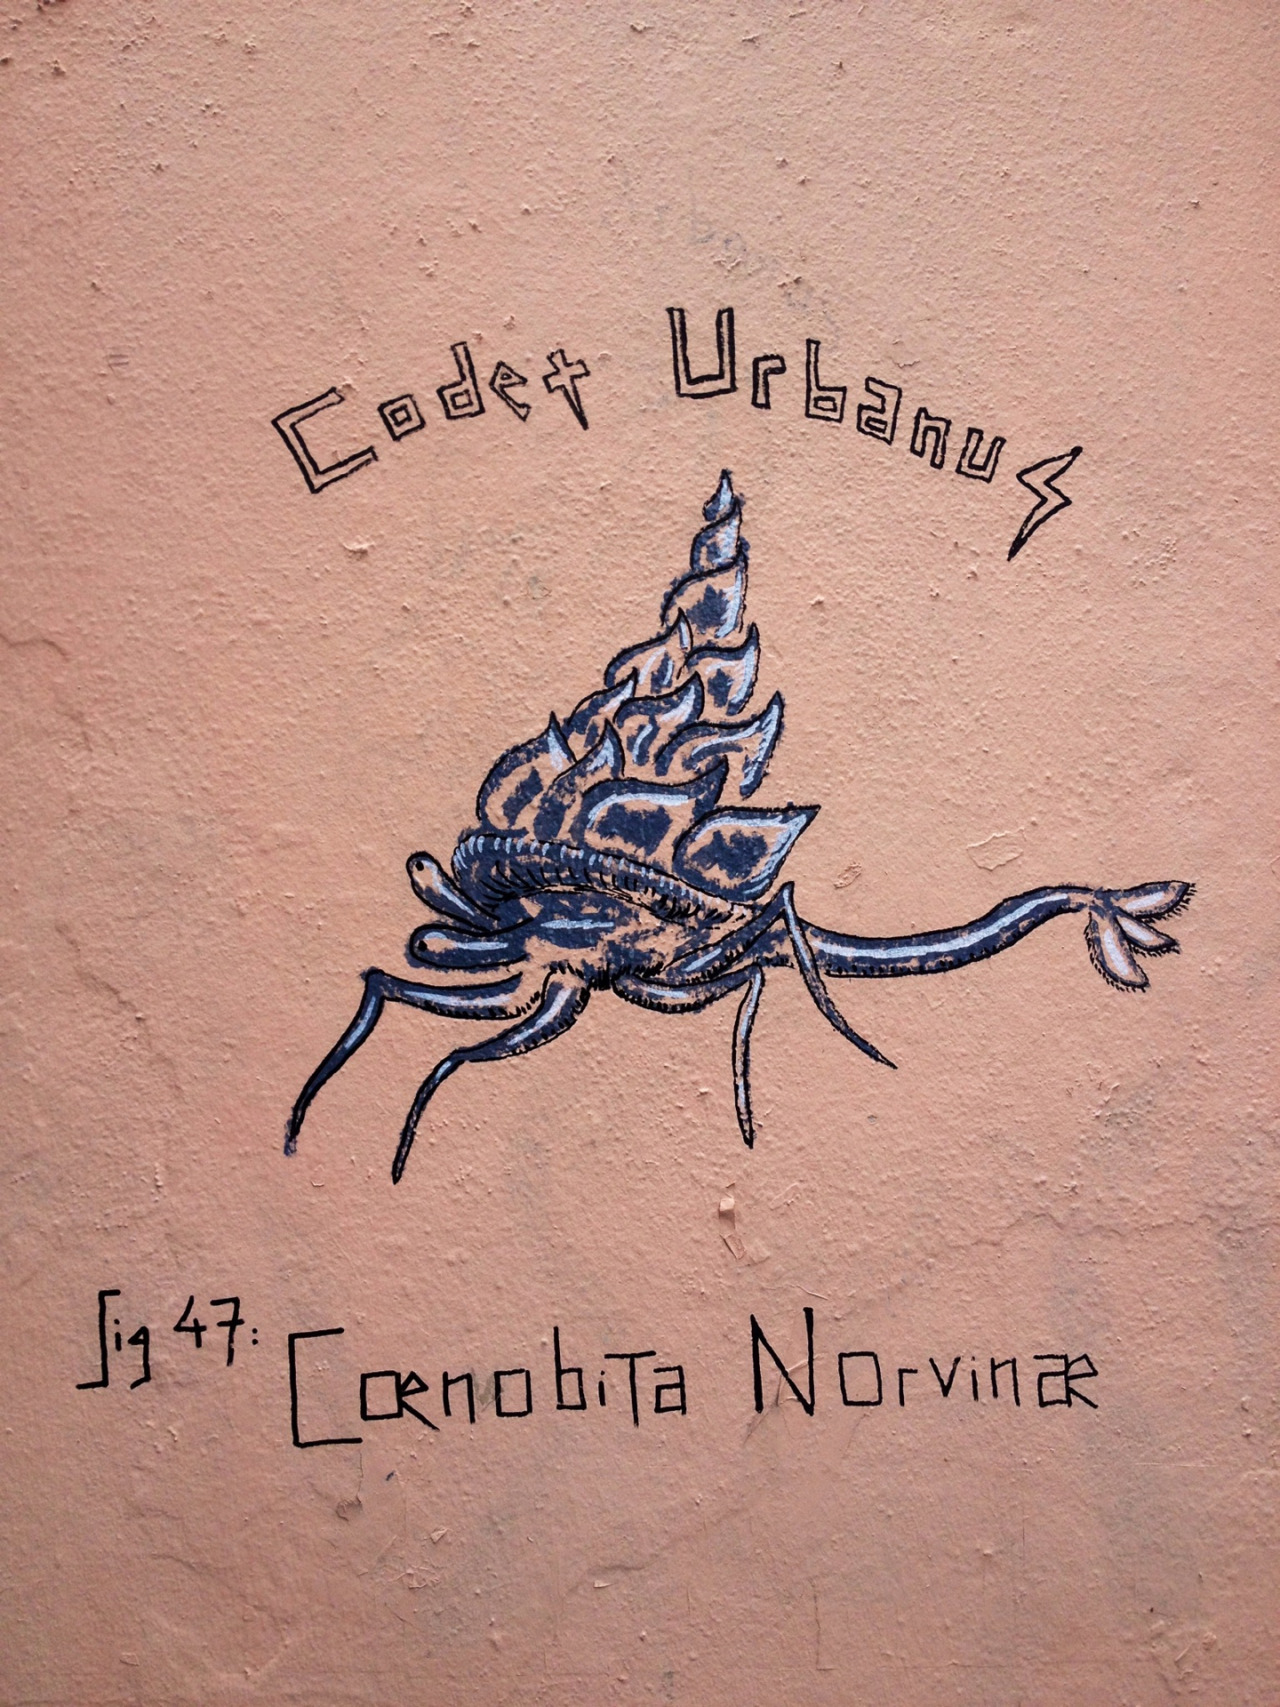 Cœnobita Norvinæ